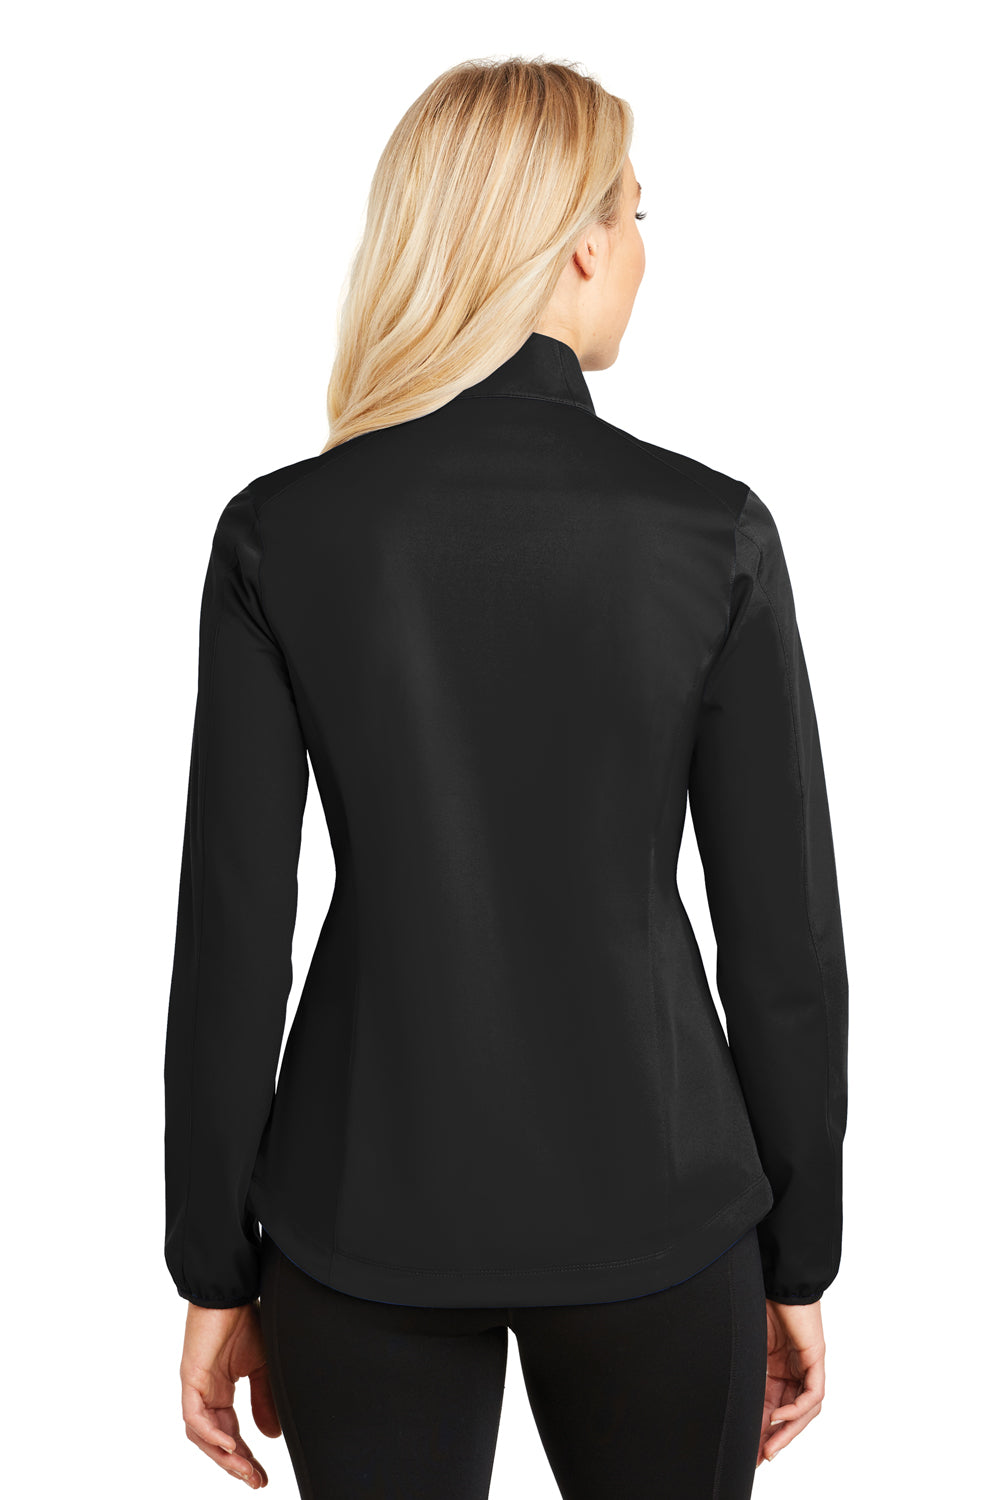 Port Authority L717 Womens Active Wind & Water Resistant Full Zip Jacket Black Back